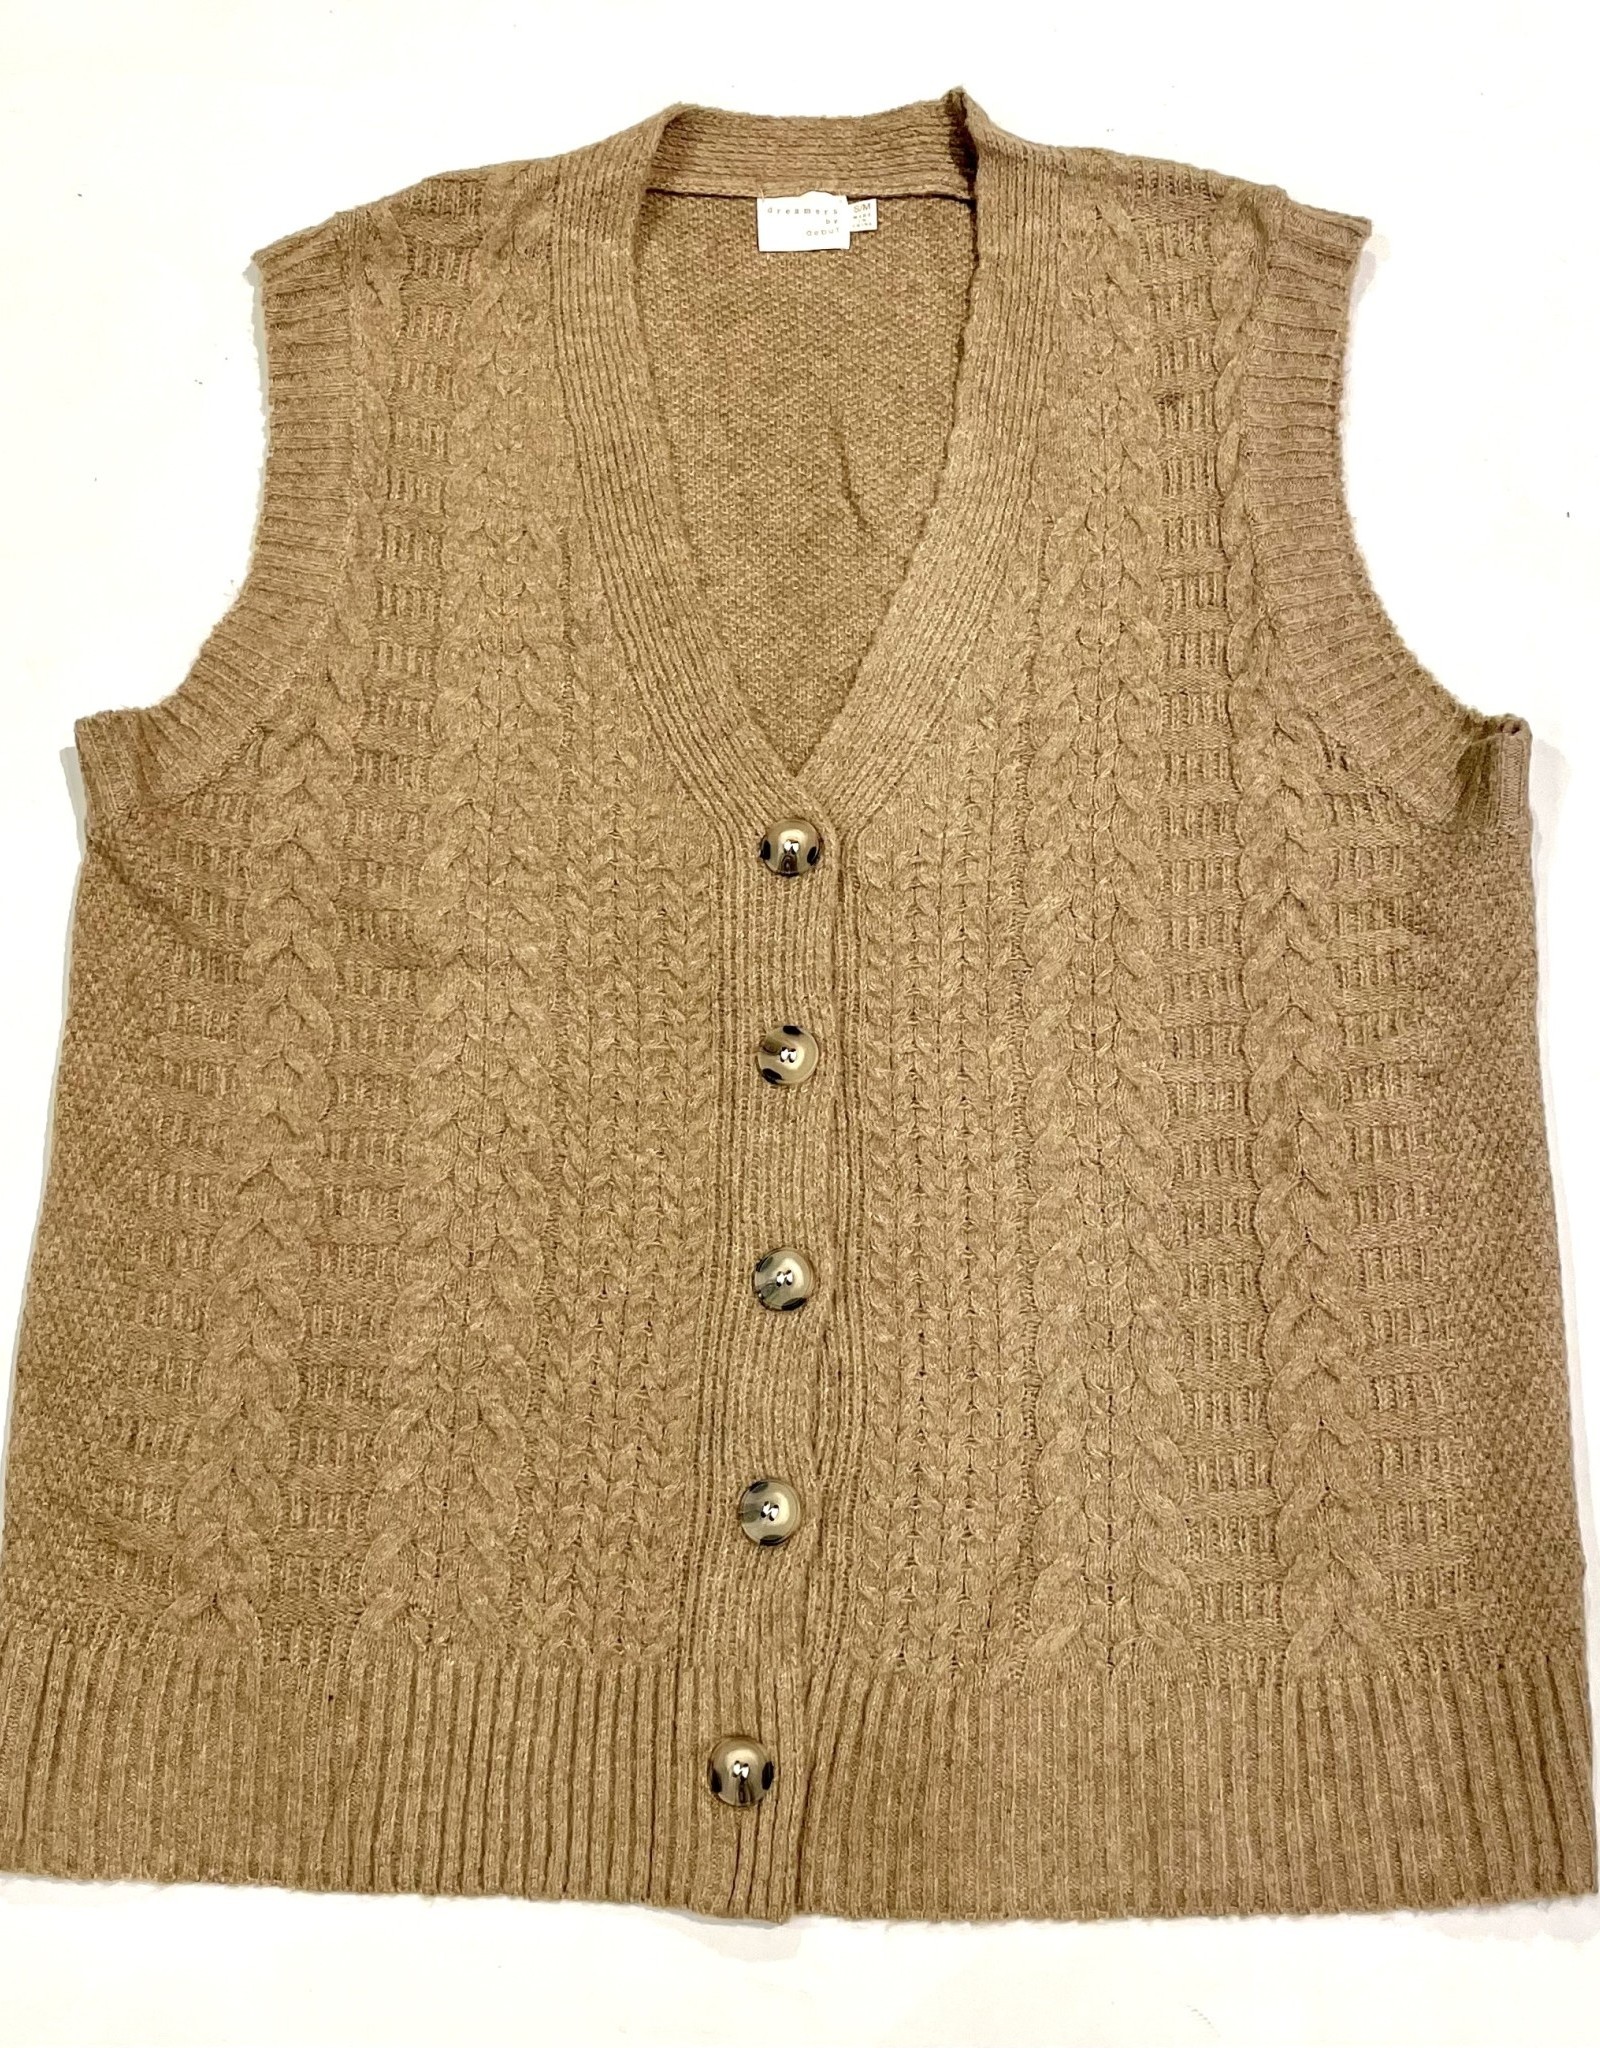 UD cable knit sweater vest UDCA9266